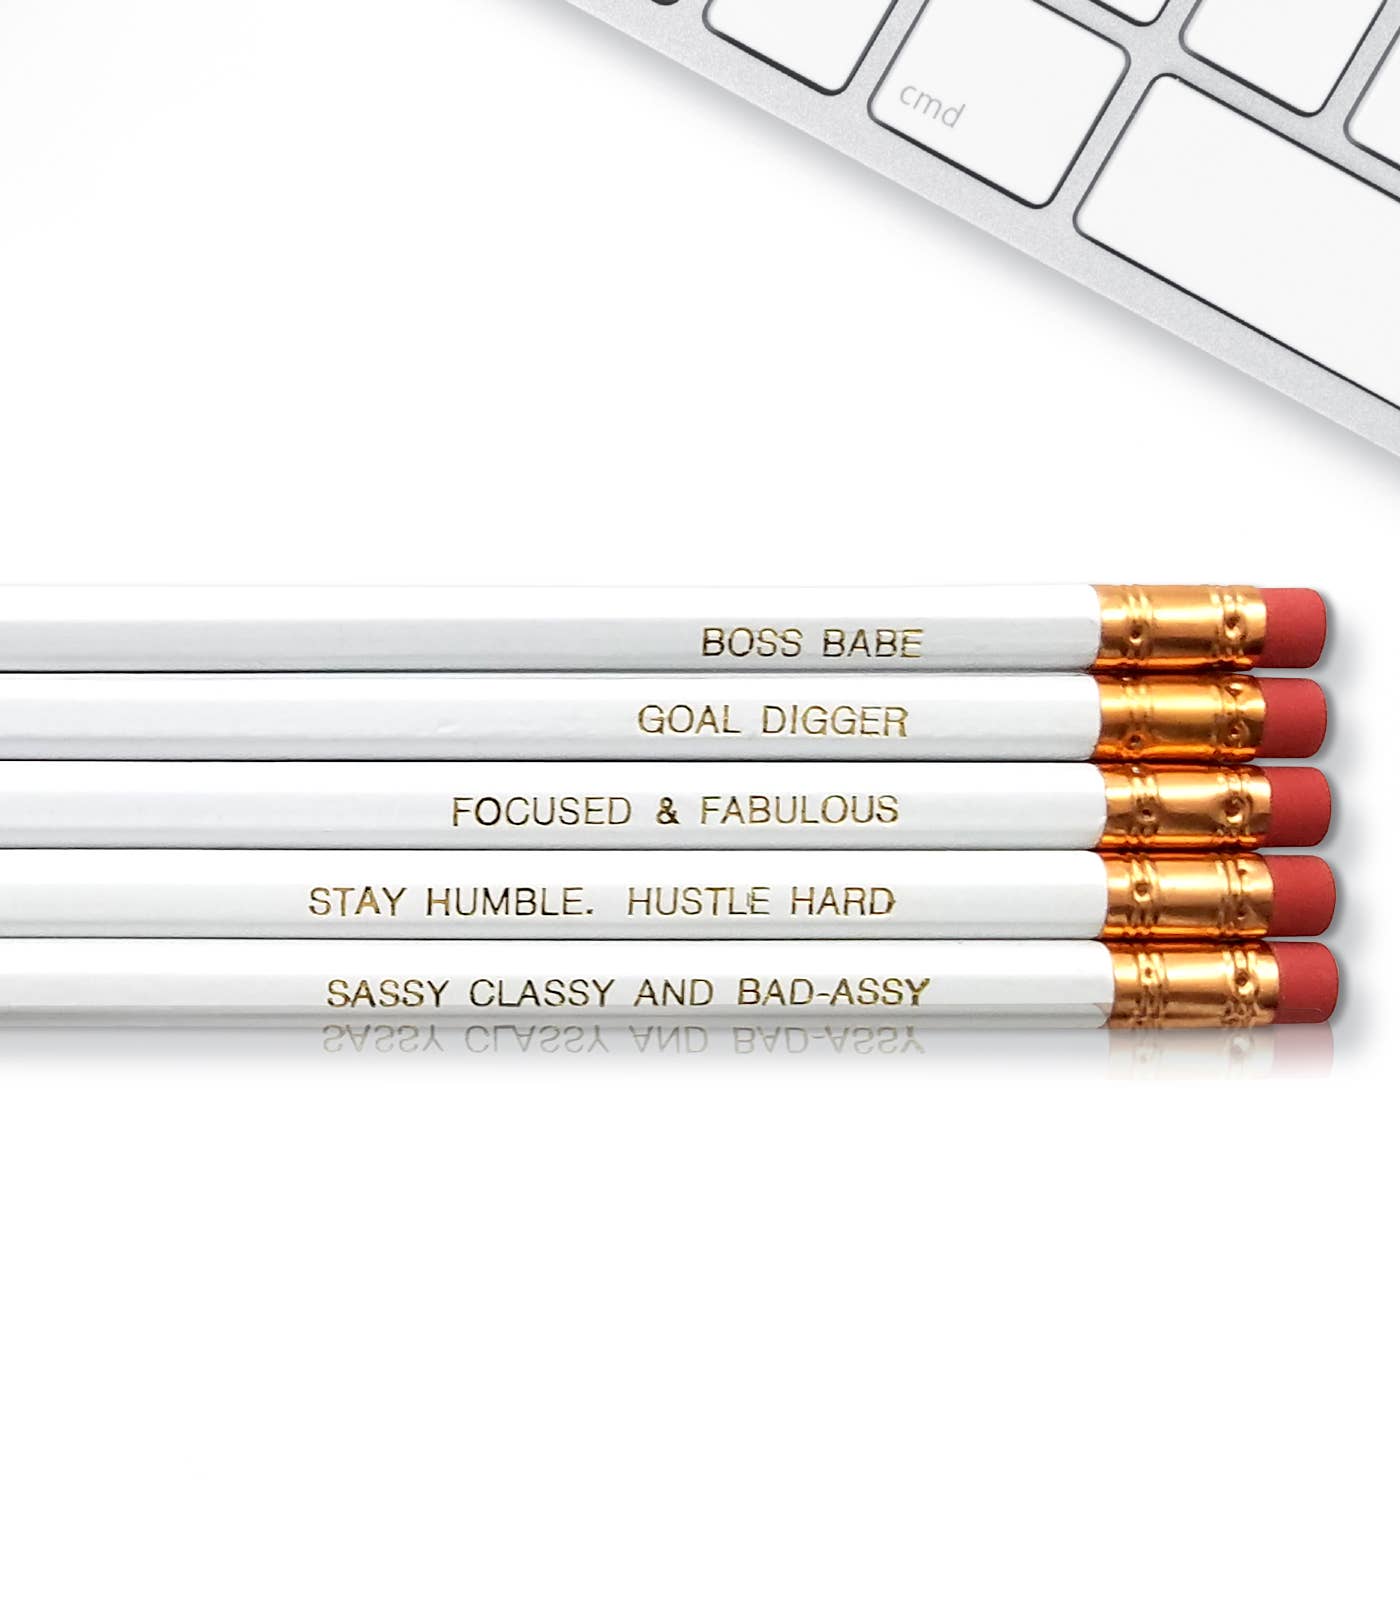 Pencils - Danshire Market and Design 